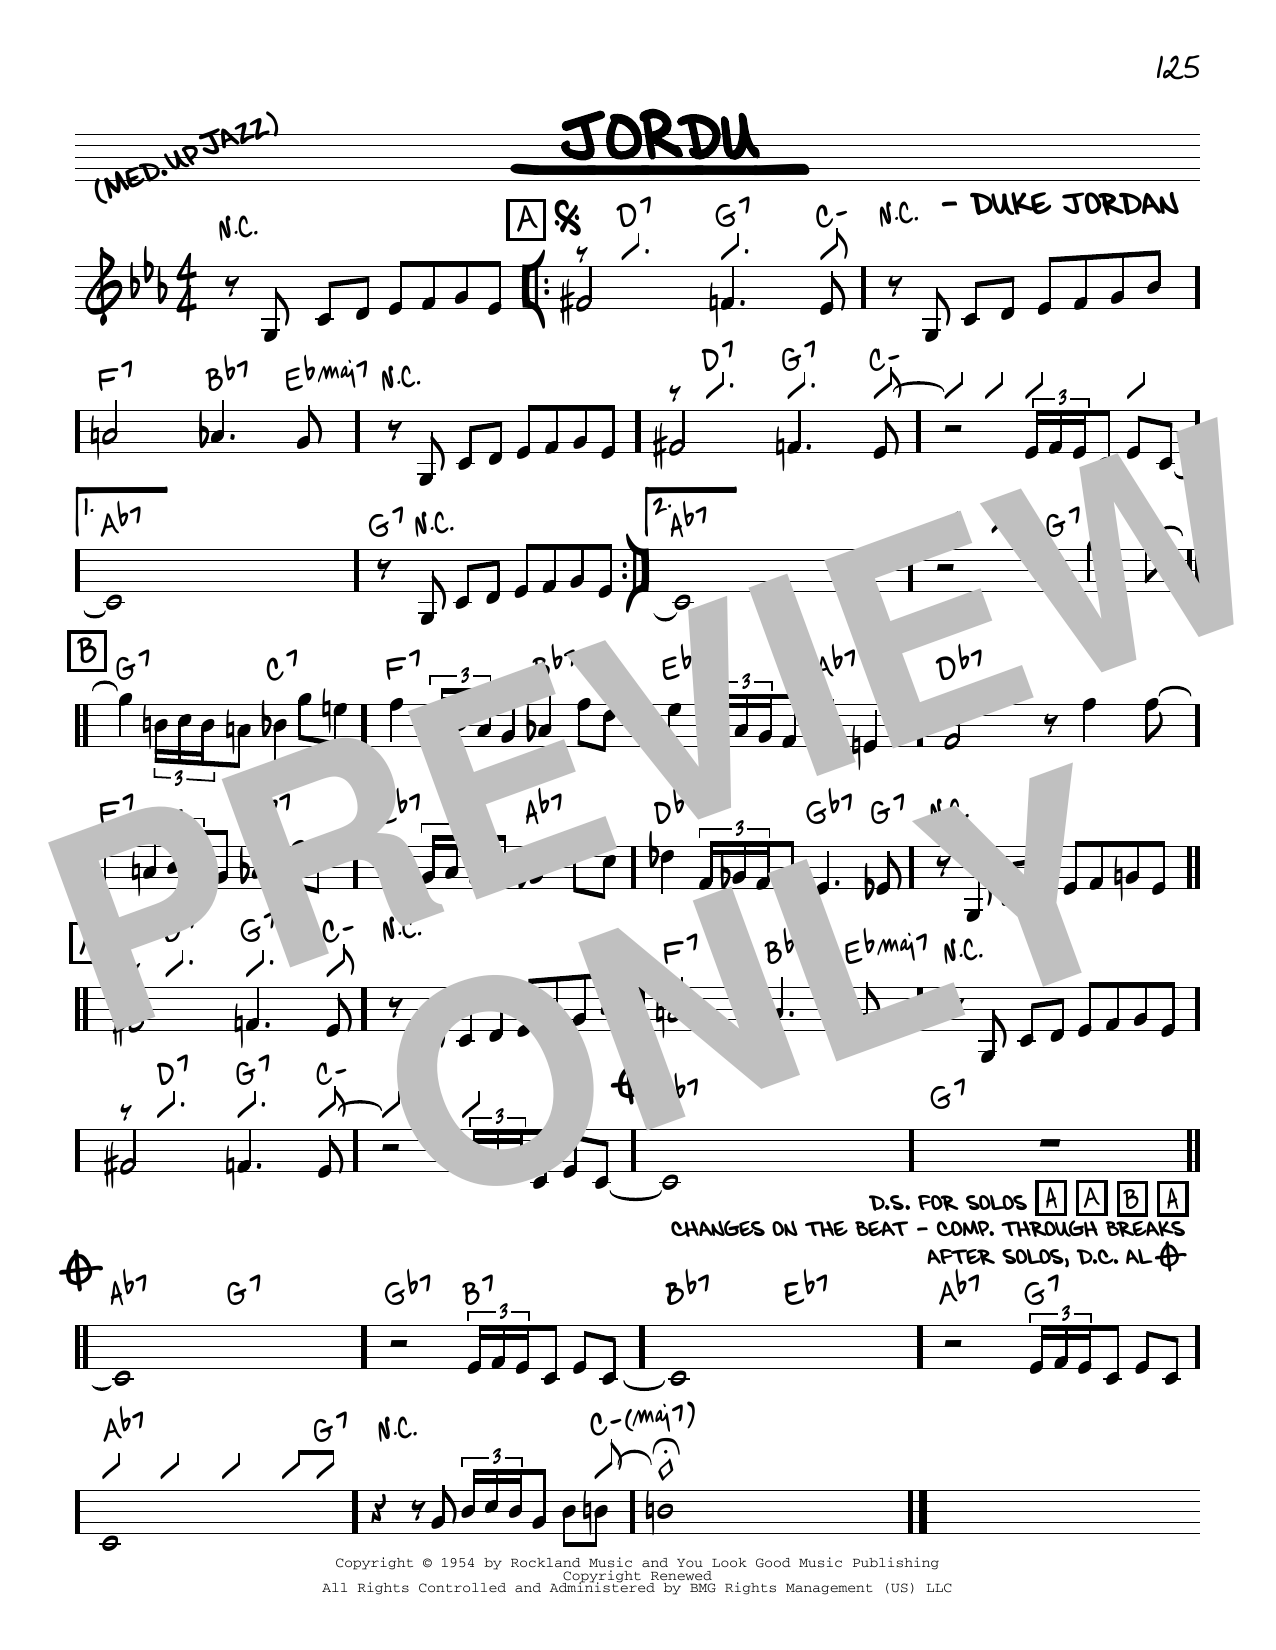 Duke Jordan Jordu Sheet Music Notes & Chords for Real Book - Melody & Chords - Bb Instruments - Download or Print PDF